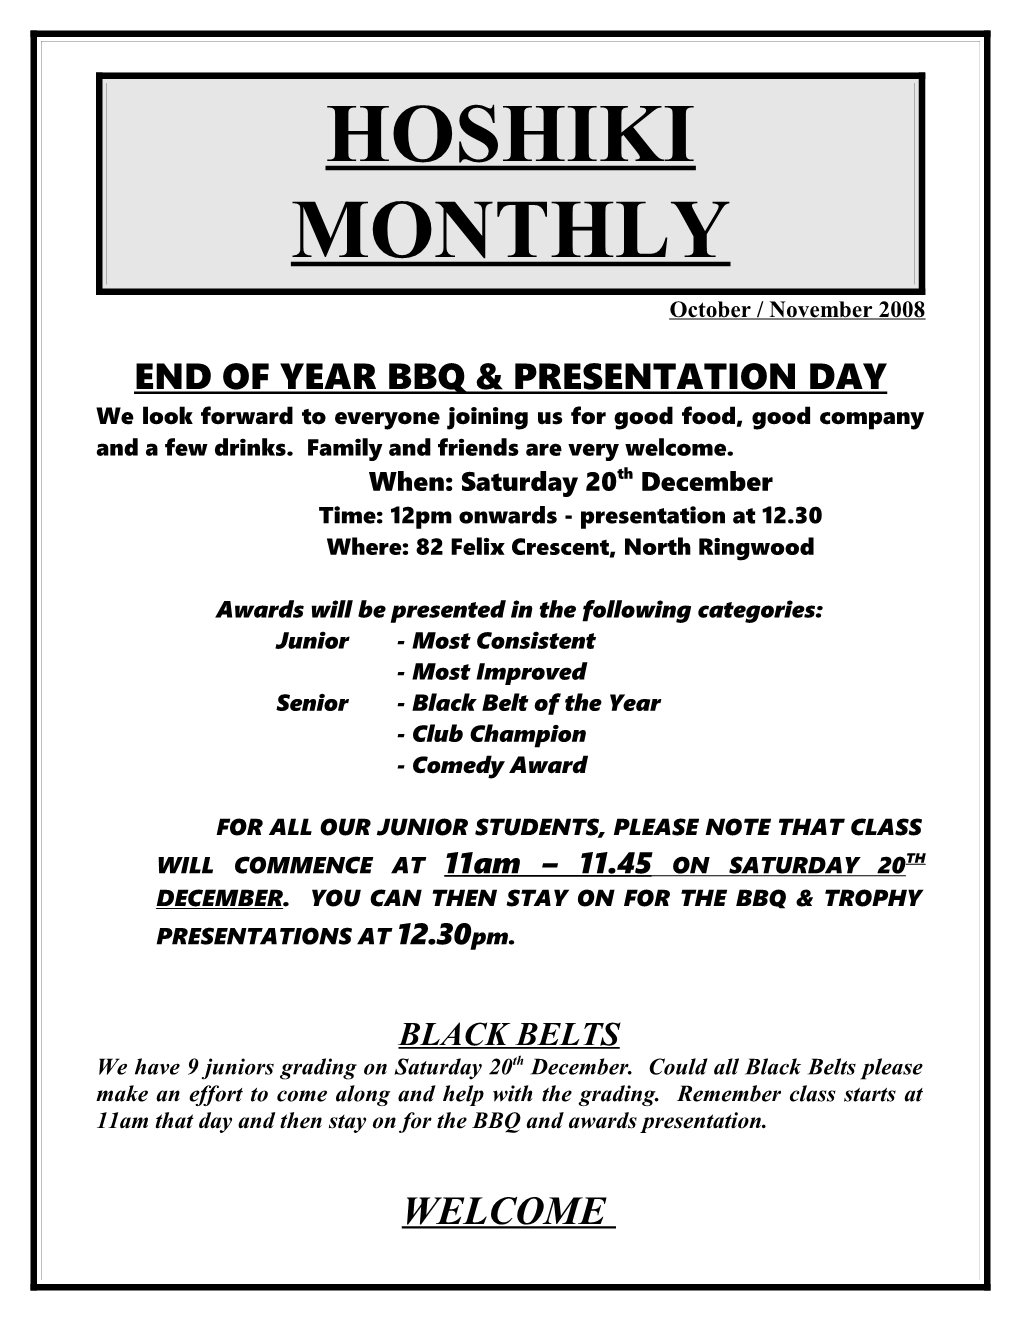 End of Year Bbq & Presentation Day